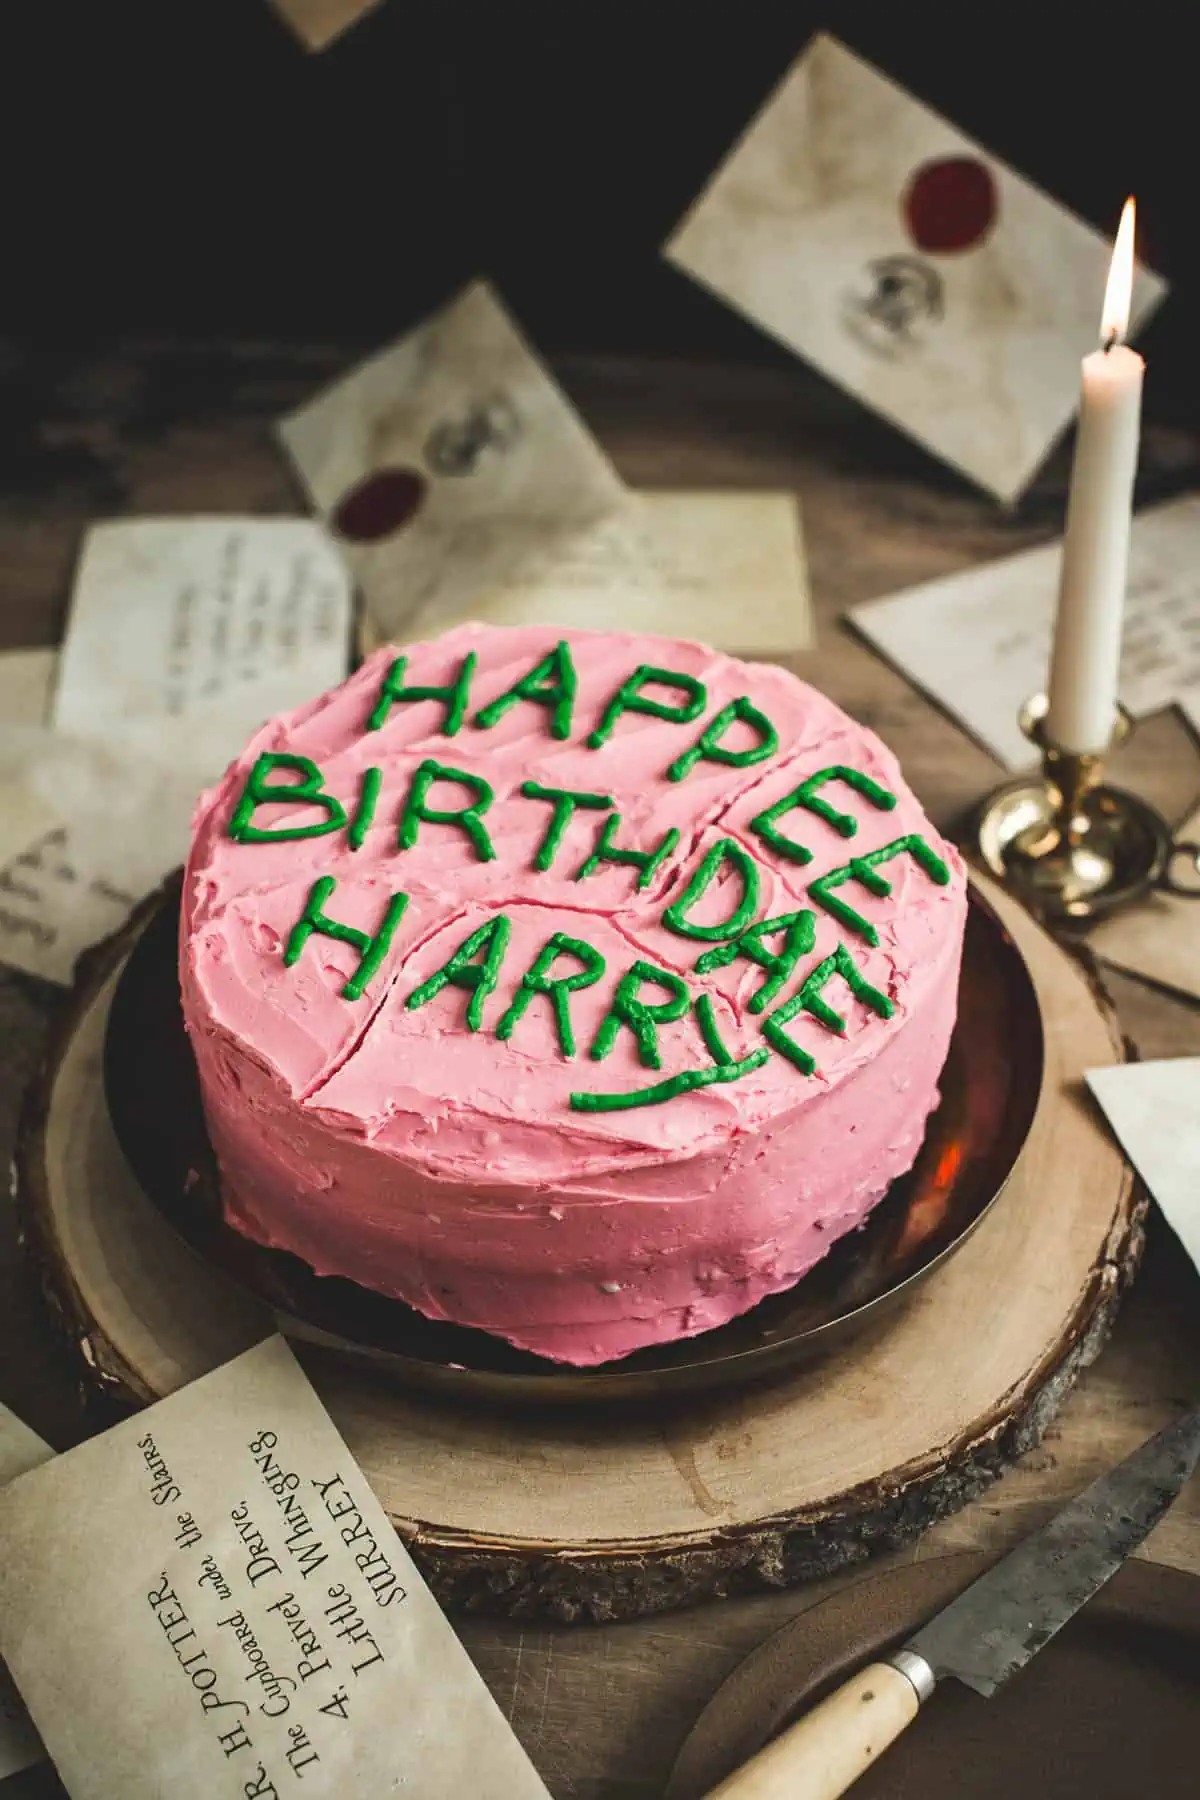 Harry Potter birthday cake from Hagrid.